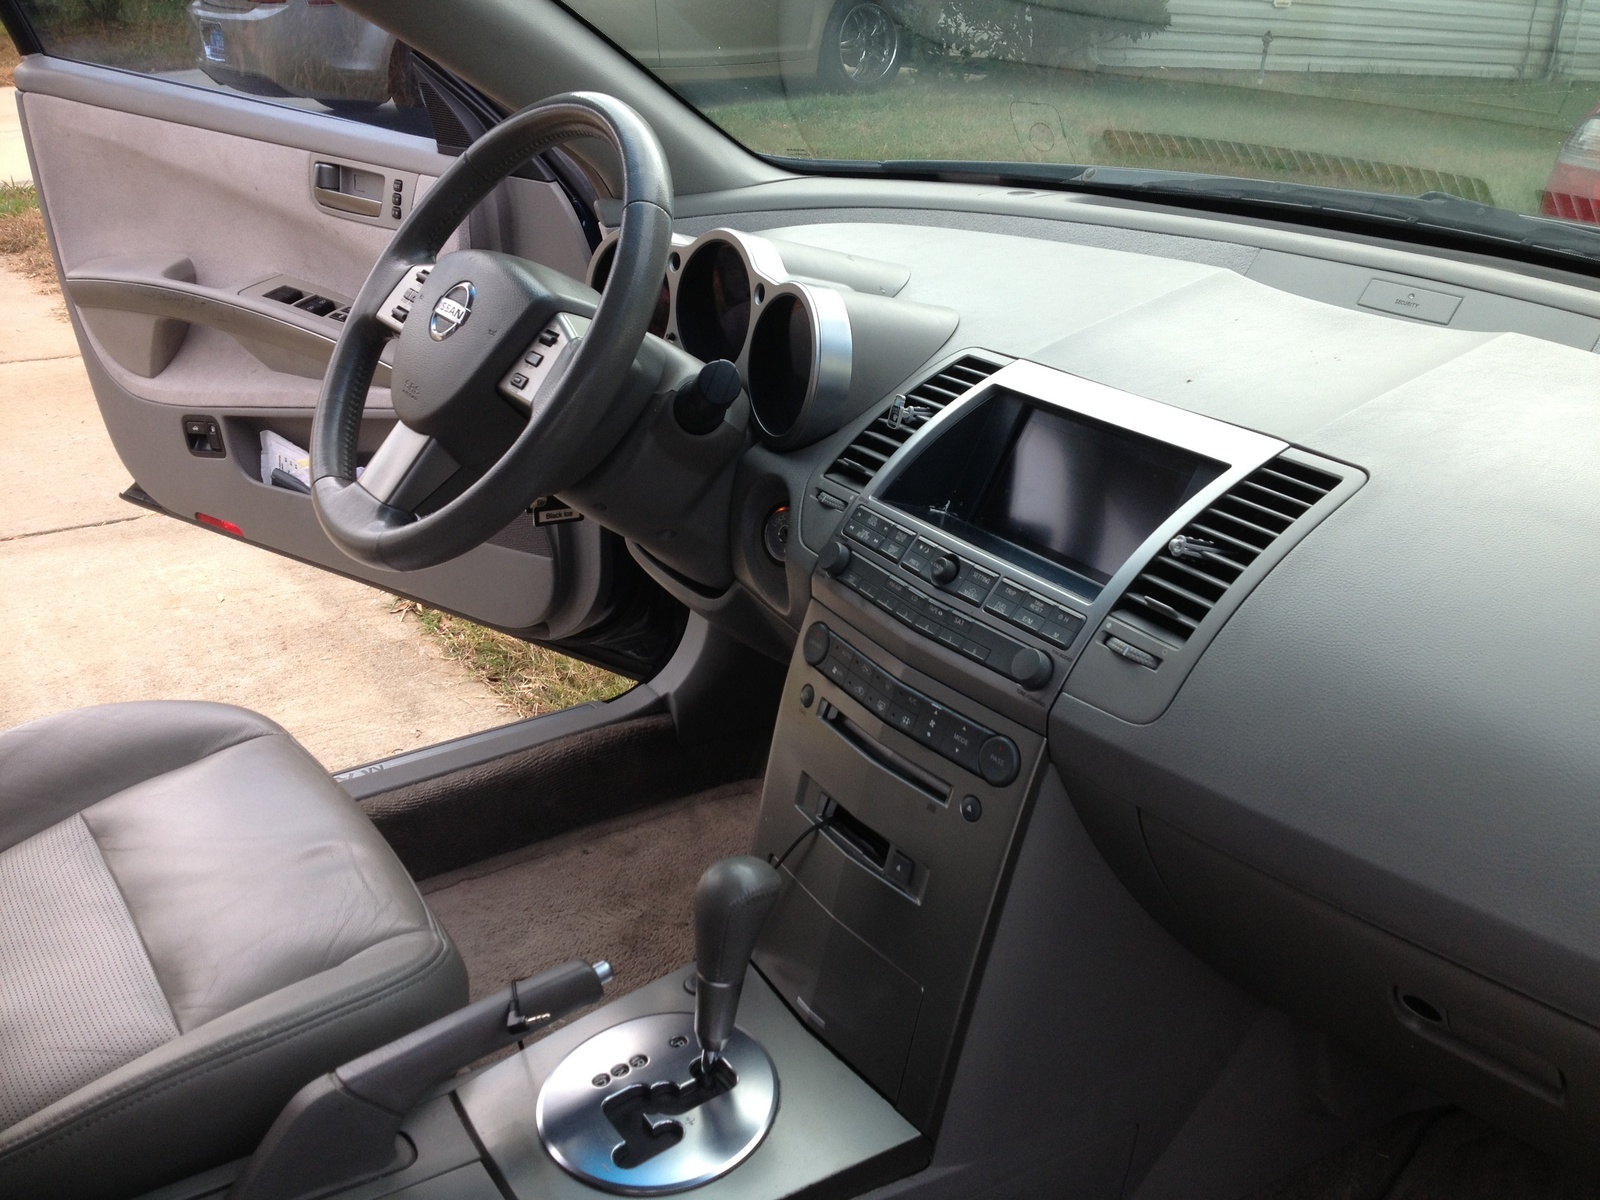 2004 Nissan maxima custom interior #1